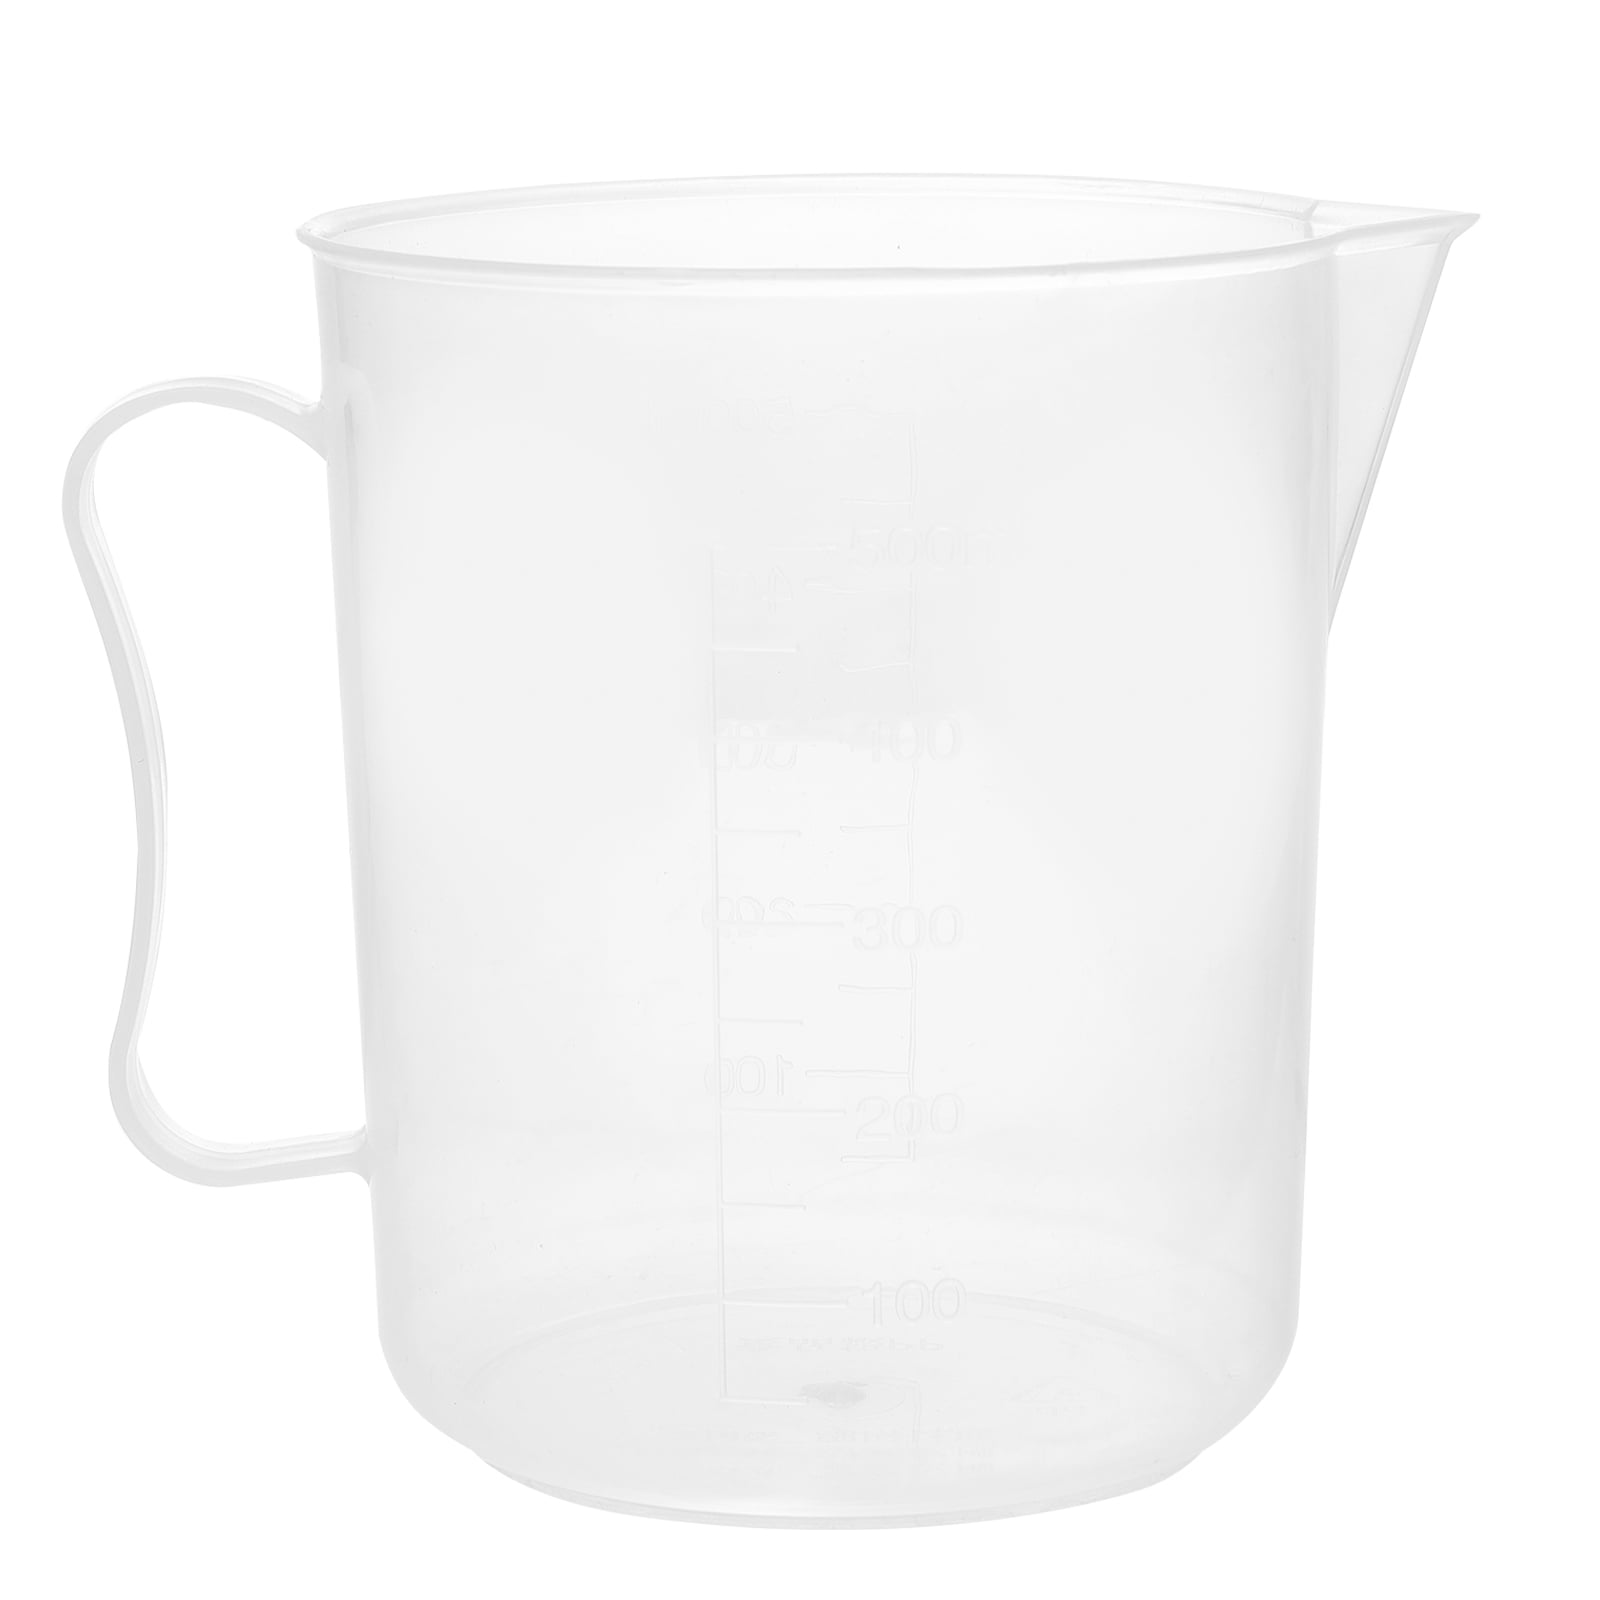 Standard Restaurant Cup Size